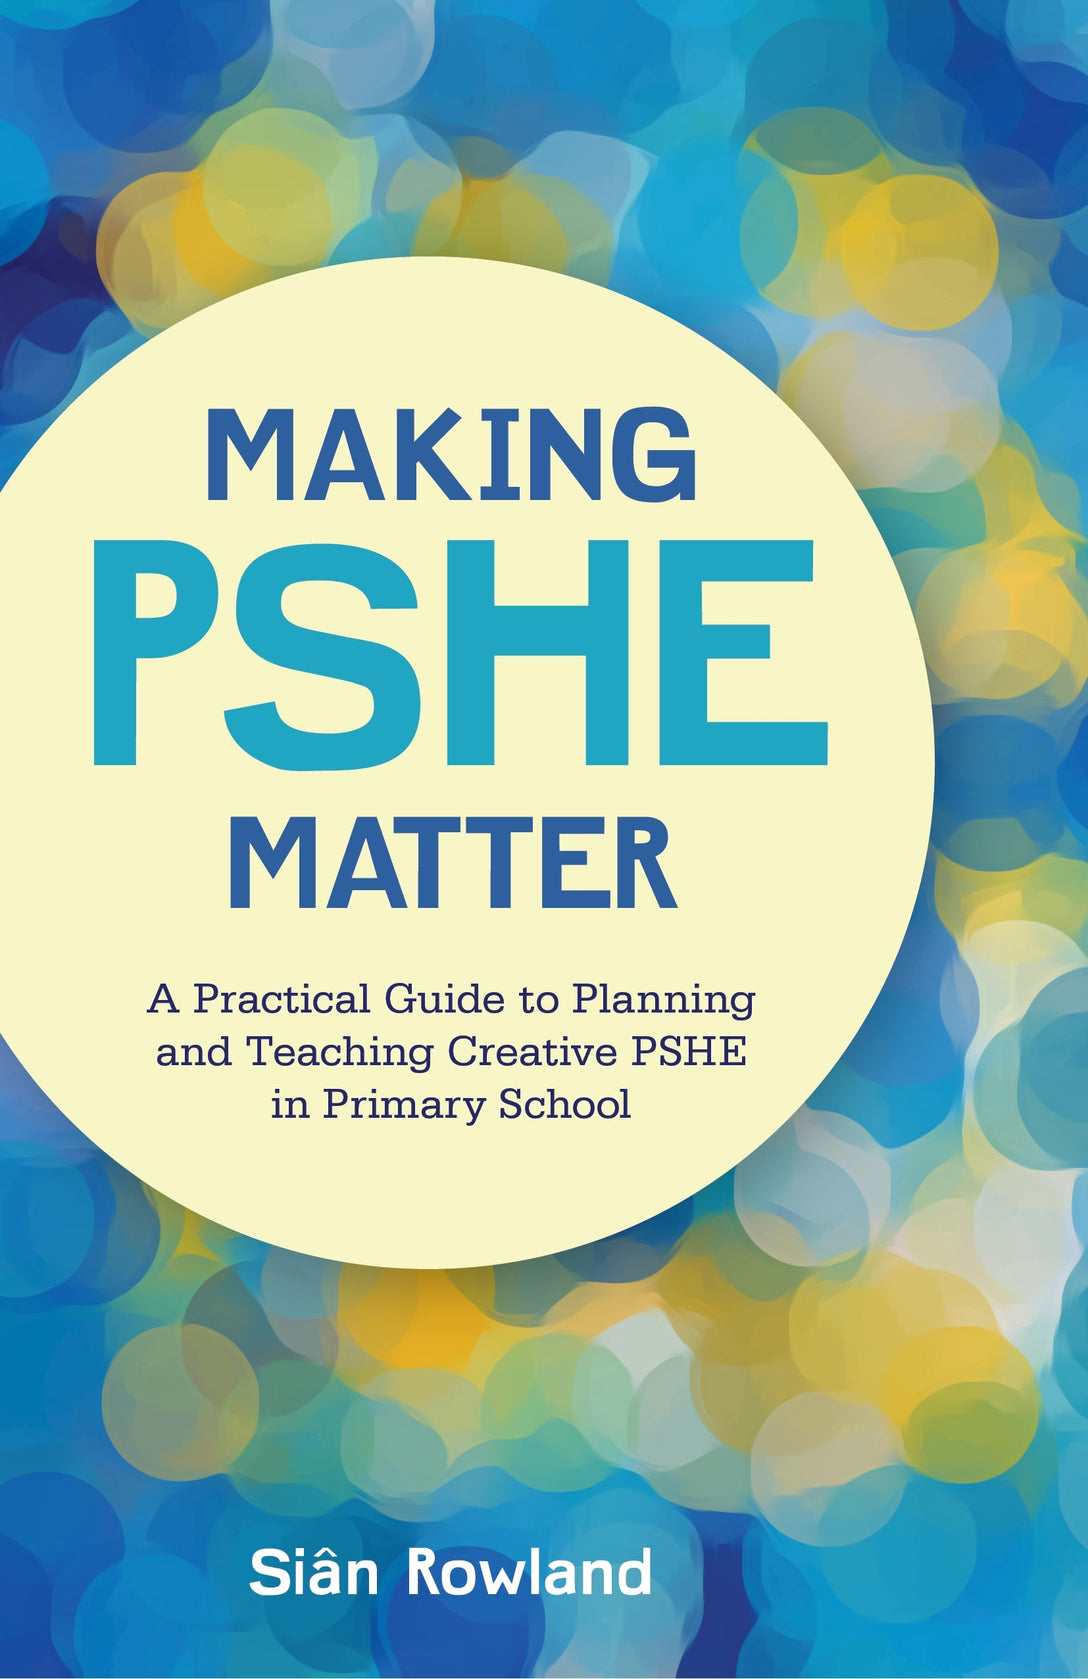 Making PSHE Matter by Siân Rowland